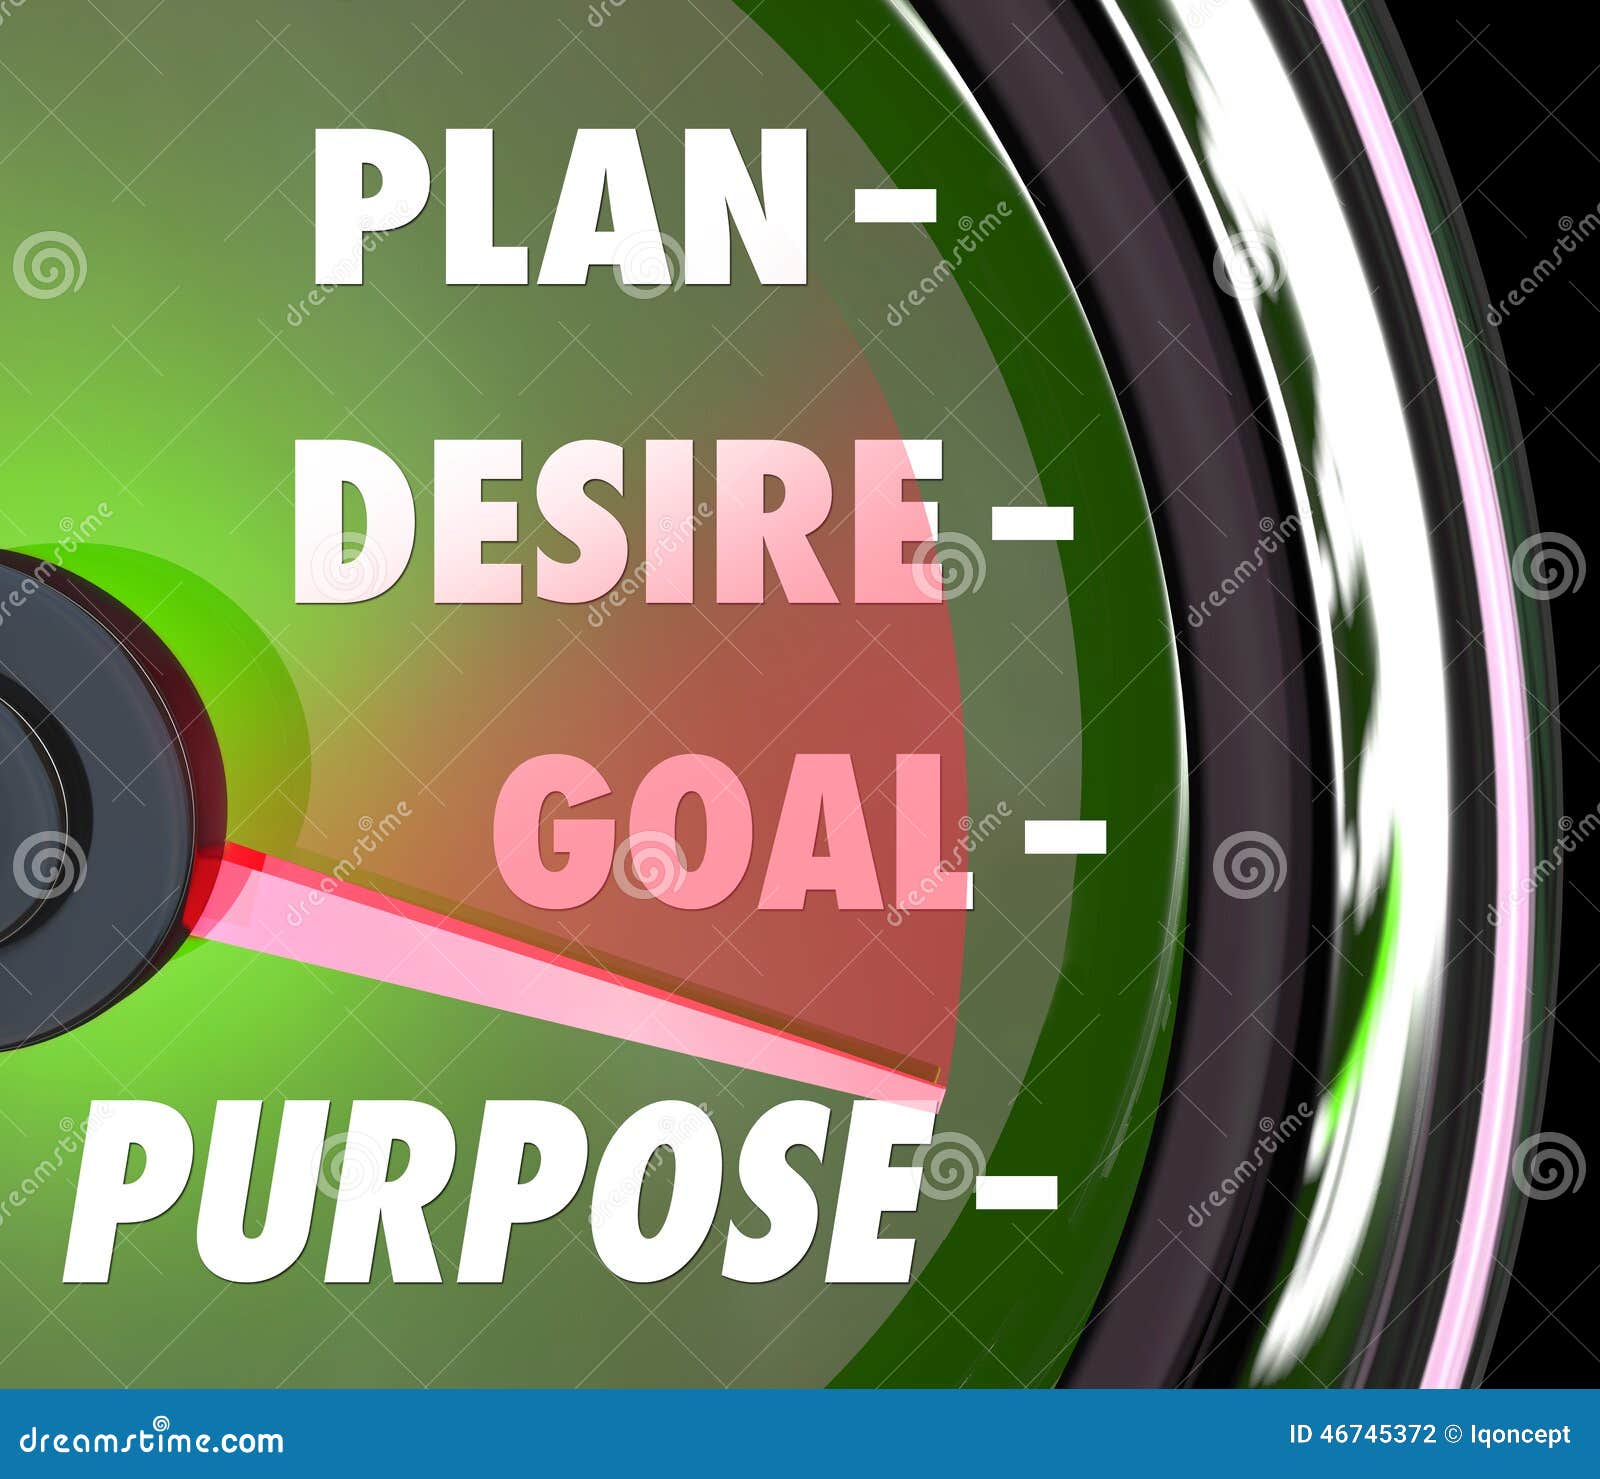 purpose plan desire goal speedometer gauge measure meaningful success